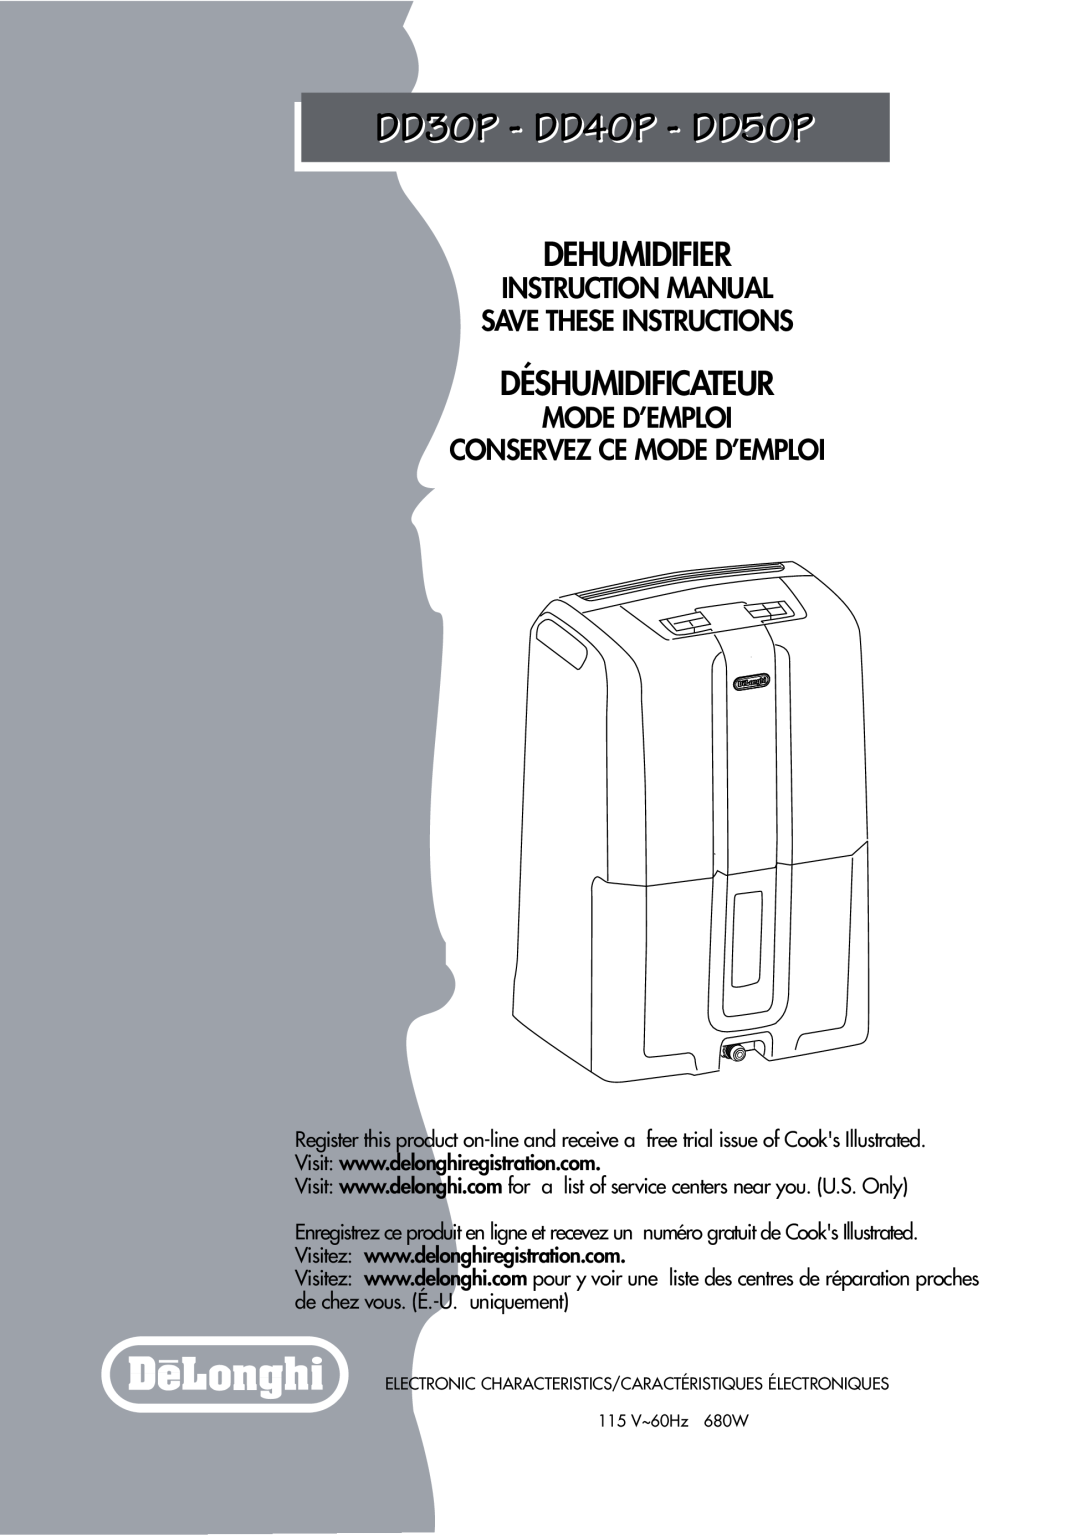 DeLonghi instruction manual DD30P - DD40P - DD50P, Dehumidifier, Déshumidificateur 